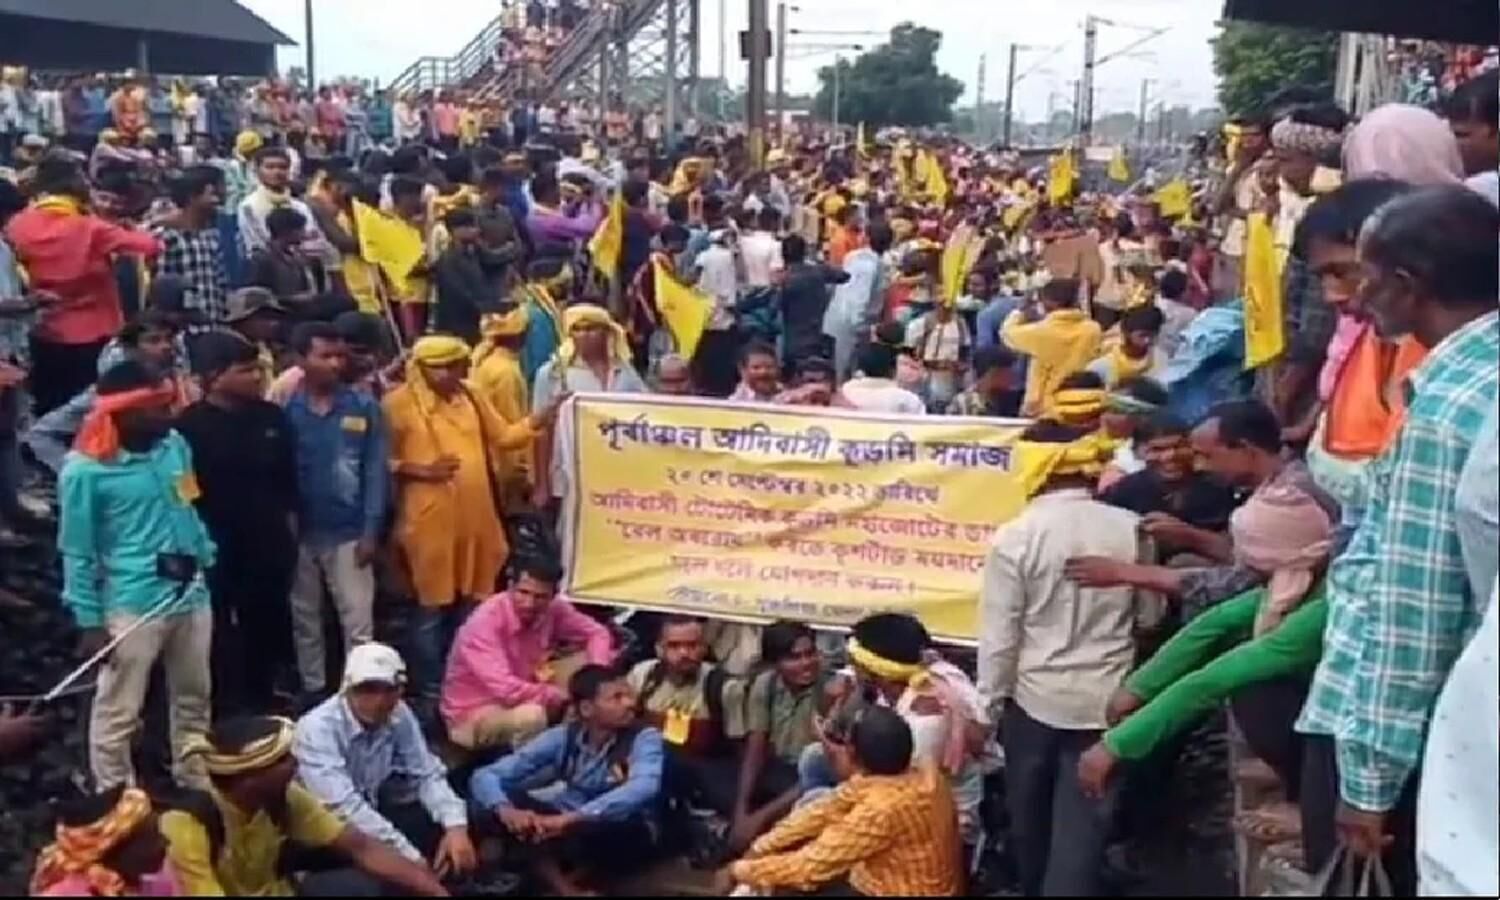 Kurmi Community Andolan: Trains stopped in West Bengal, Jharkhand, Odisha due to the agitation of Kurmi community